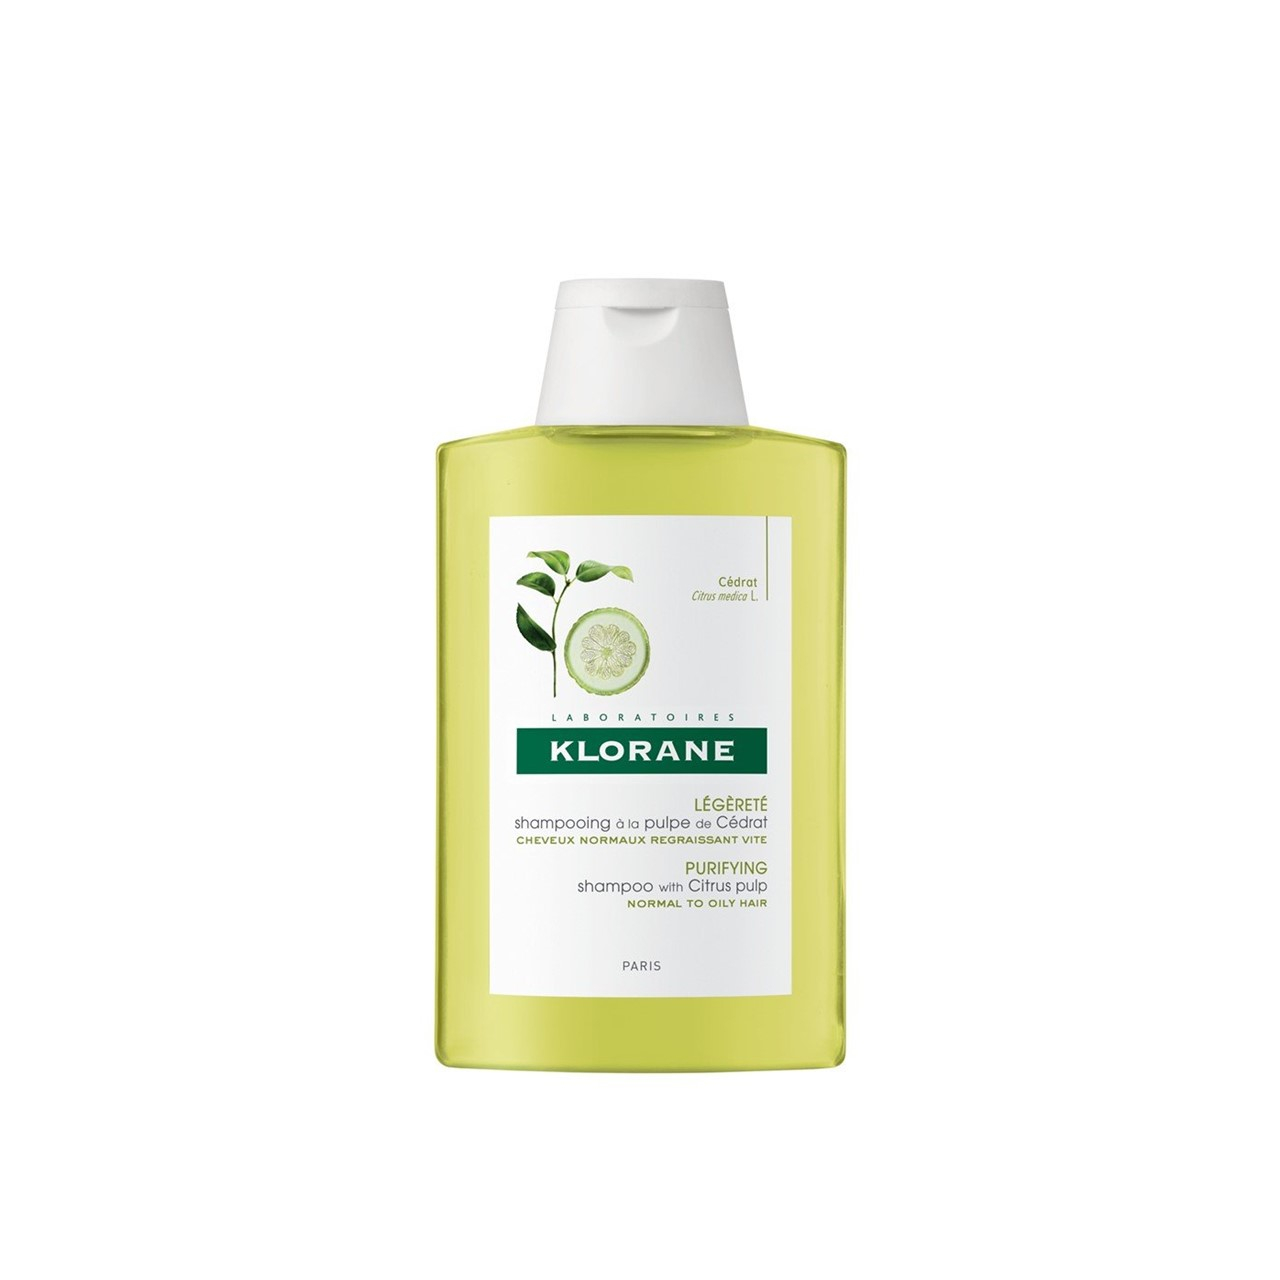 Klorane Purifying Shampoo with Citrus Pulp 200ml